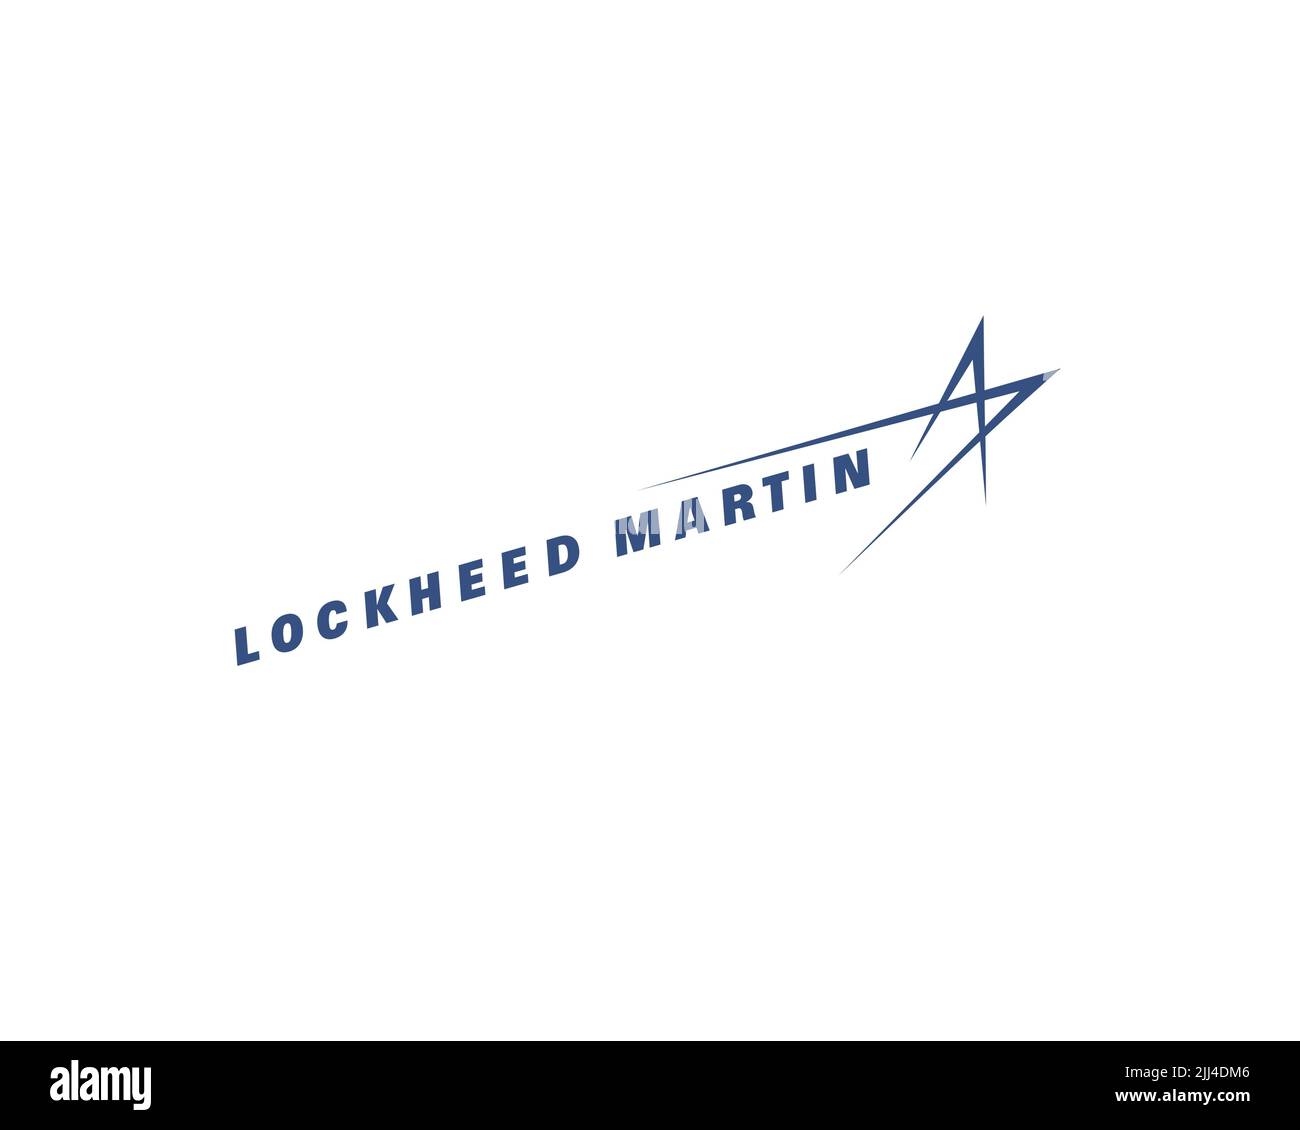 Lockheed Martin Aeronautics, logo pivoté, fond blanc Banque D'Images